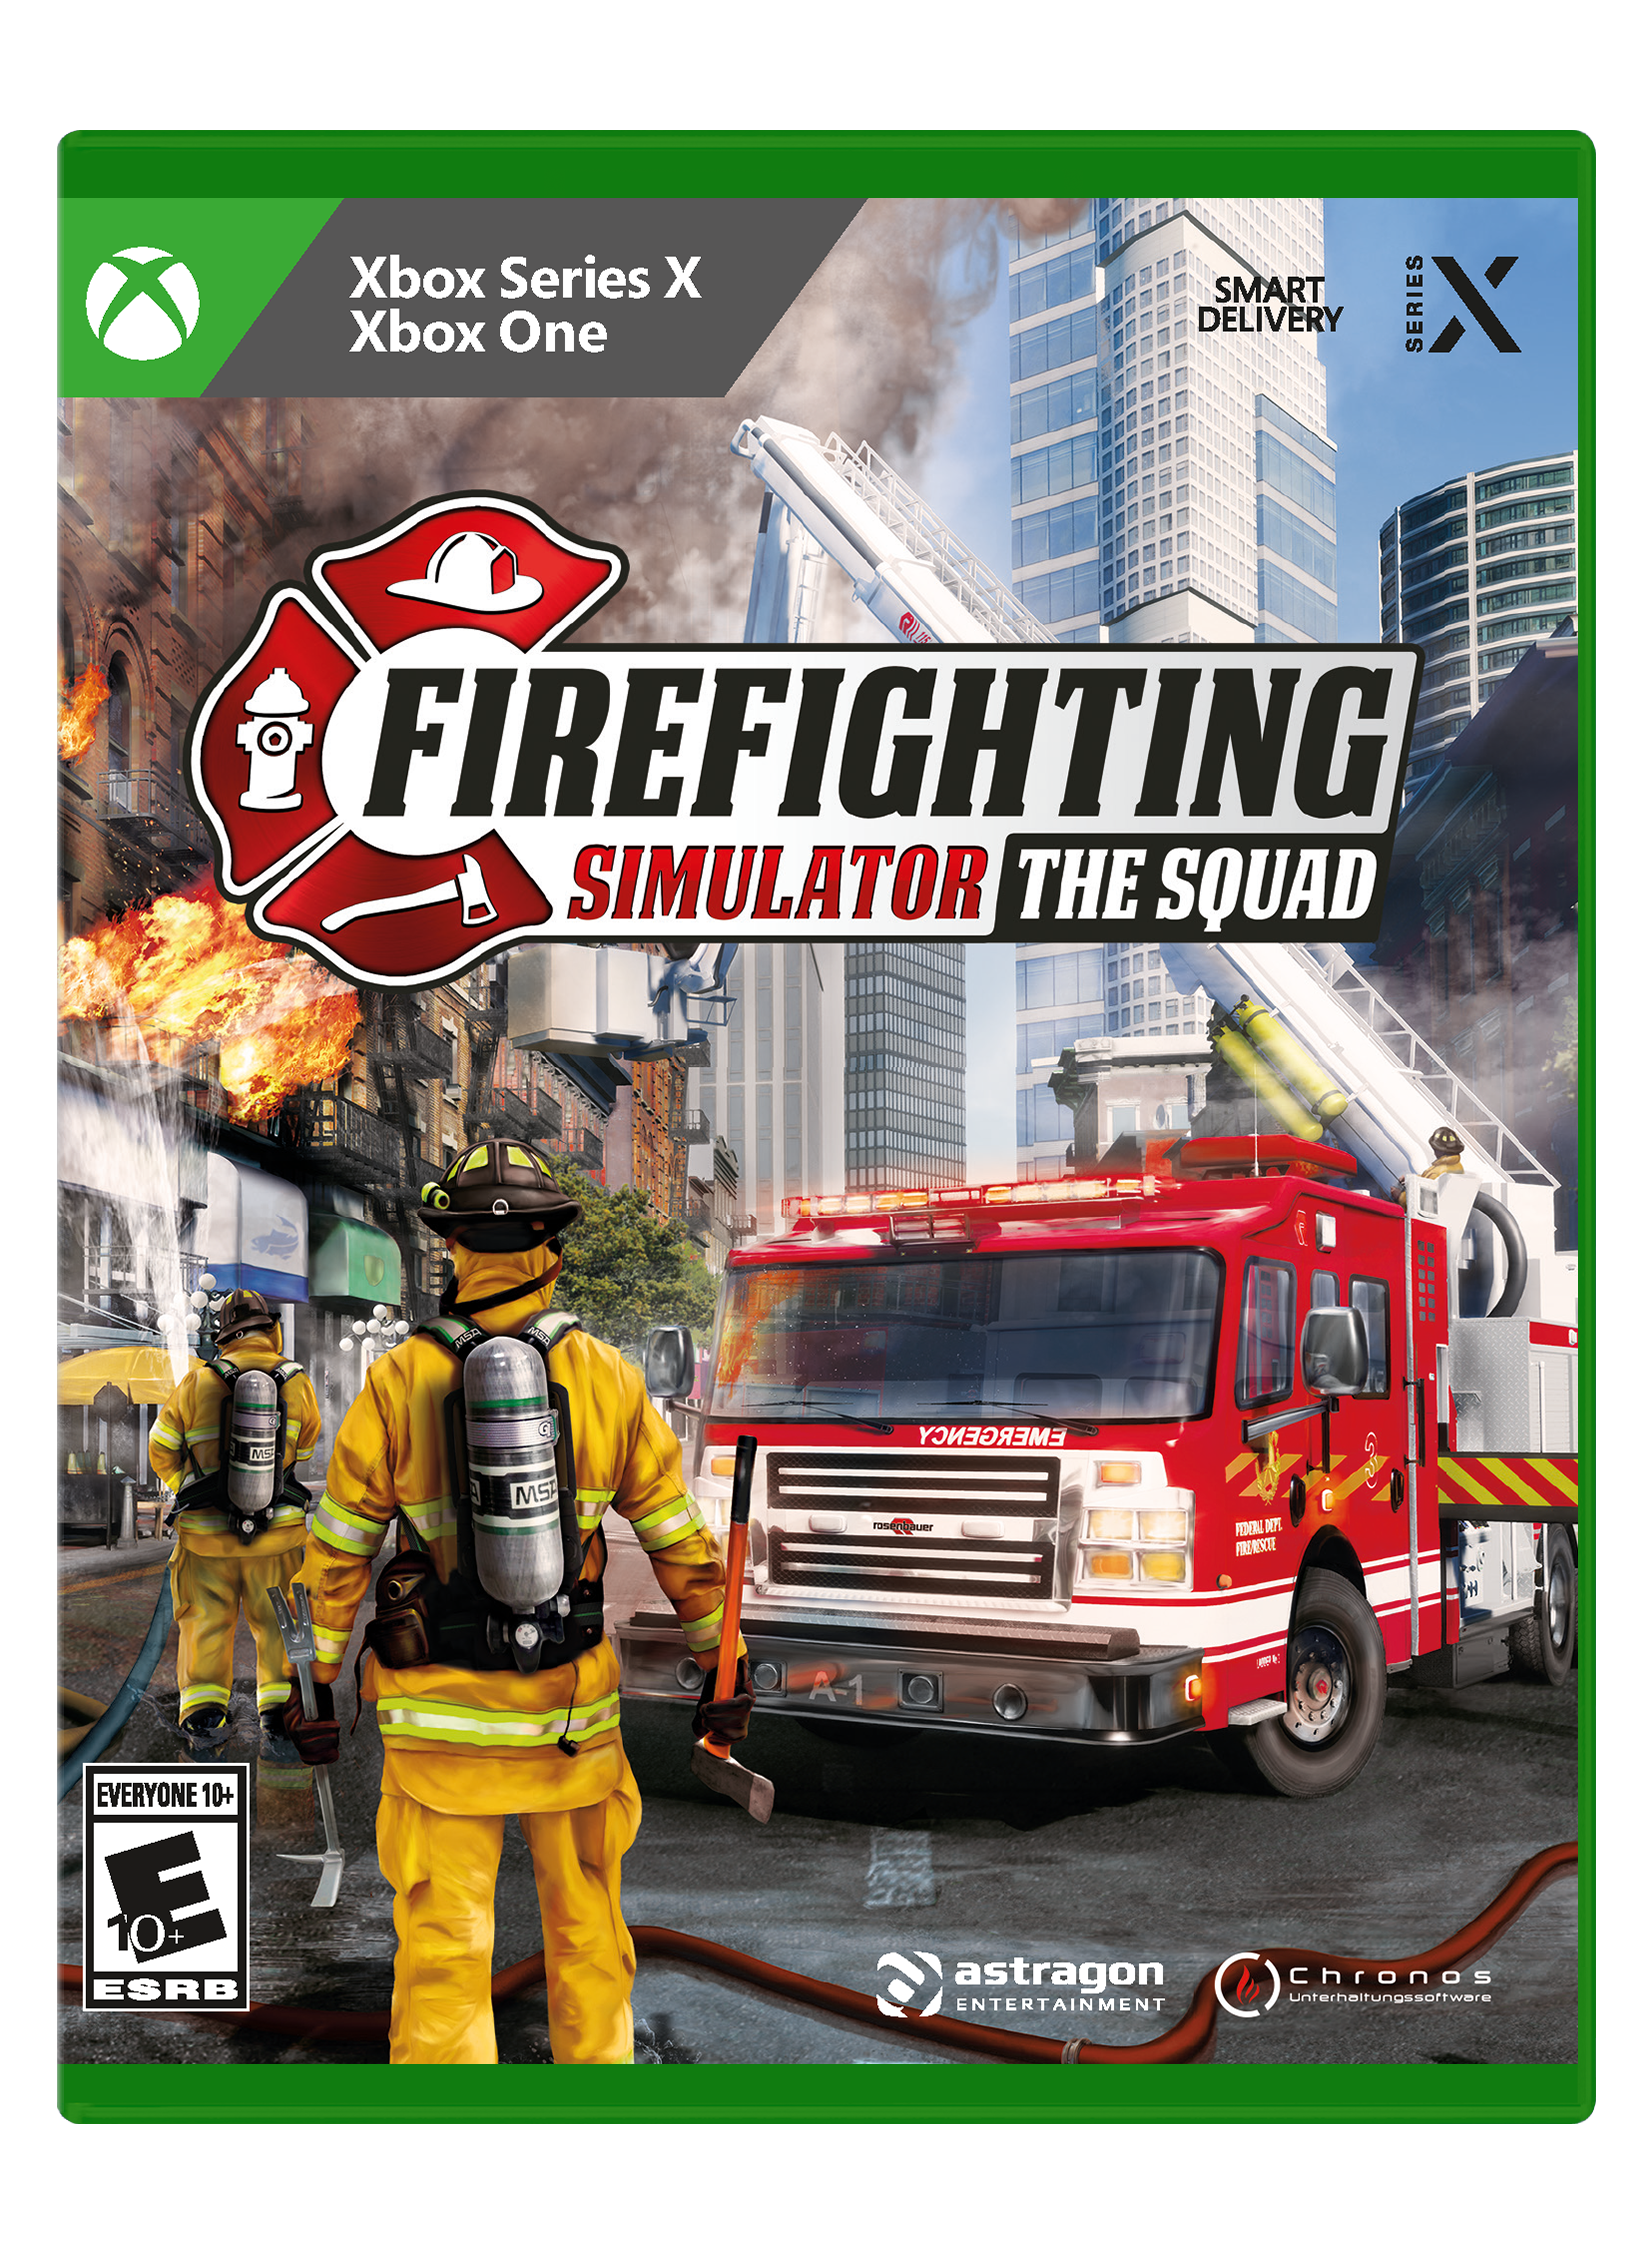 Firefighting Squad Series Series Xbox X, | | Xbox The GameStop Xbox - Simulator - One X